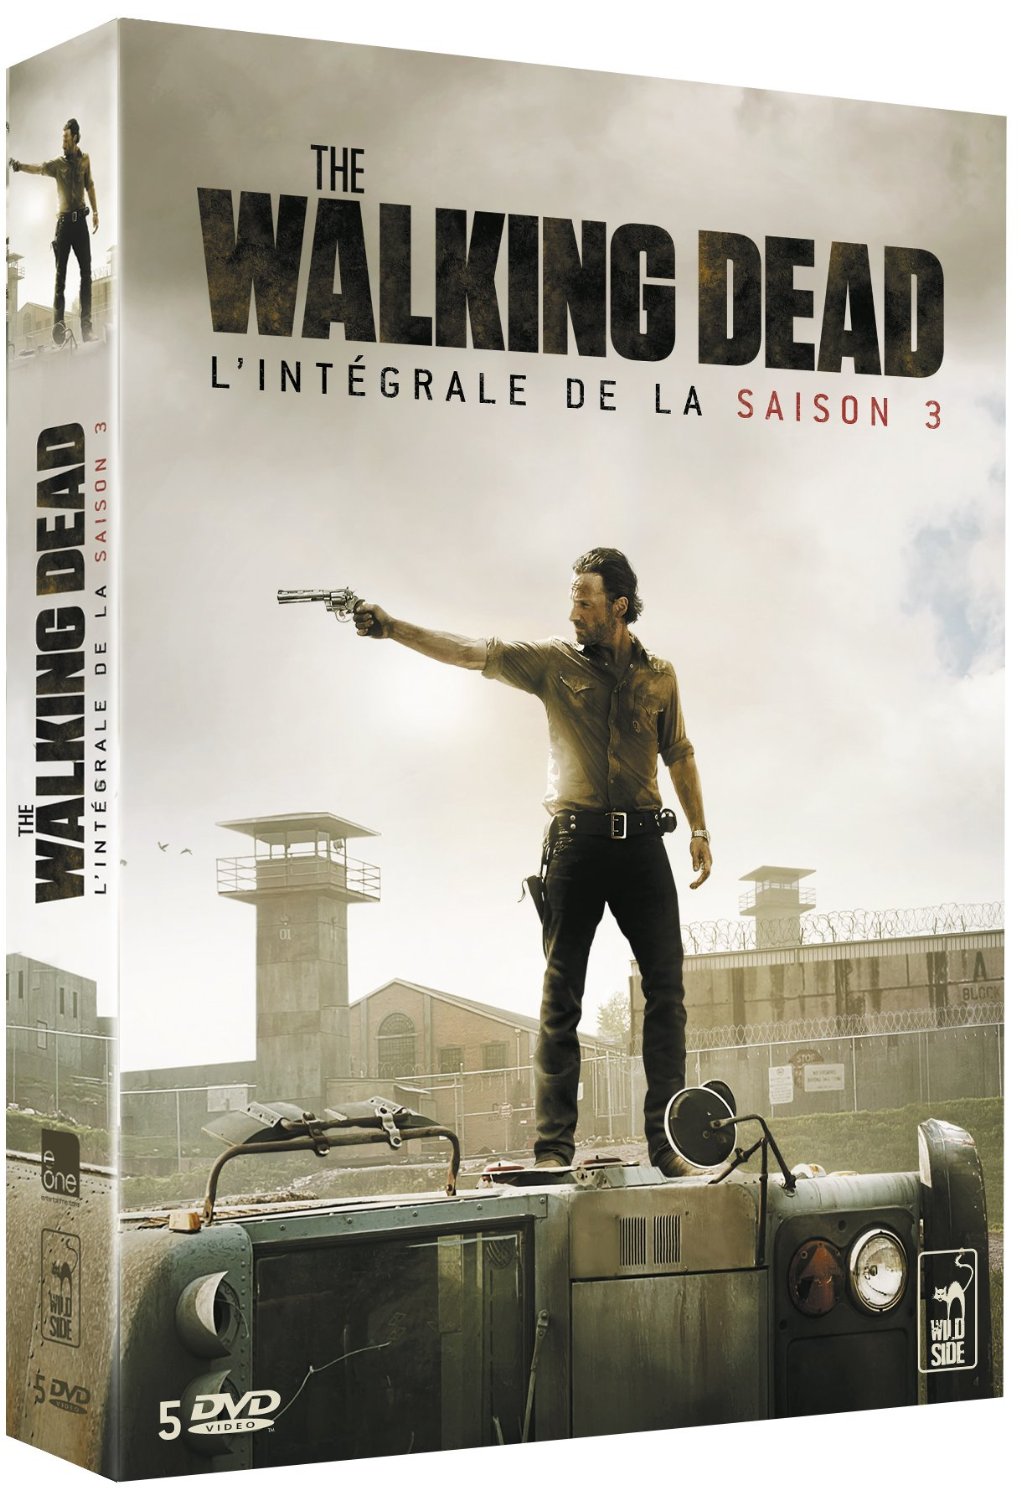 The Walking Dead Coffret DVD saison 3